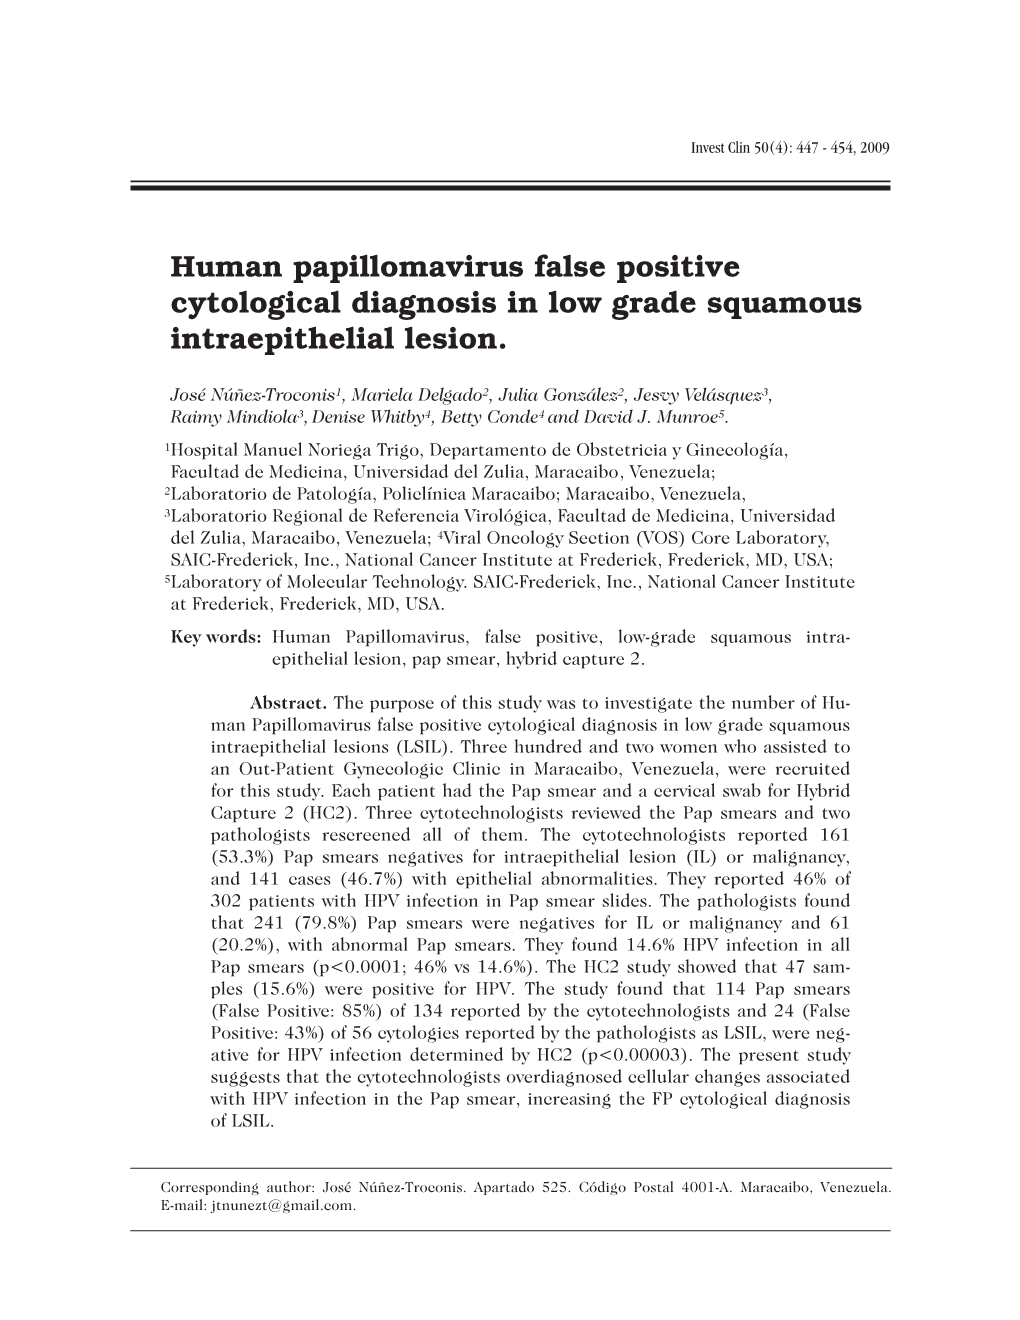 Human Papillomavirus False Positive Cytological Diagnosis in Low Grade Squamous Intraepithelial Lesion